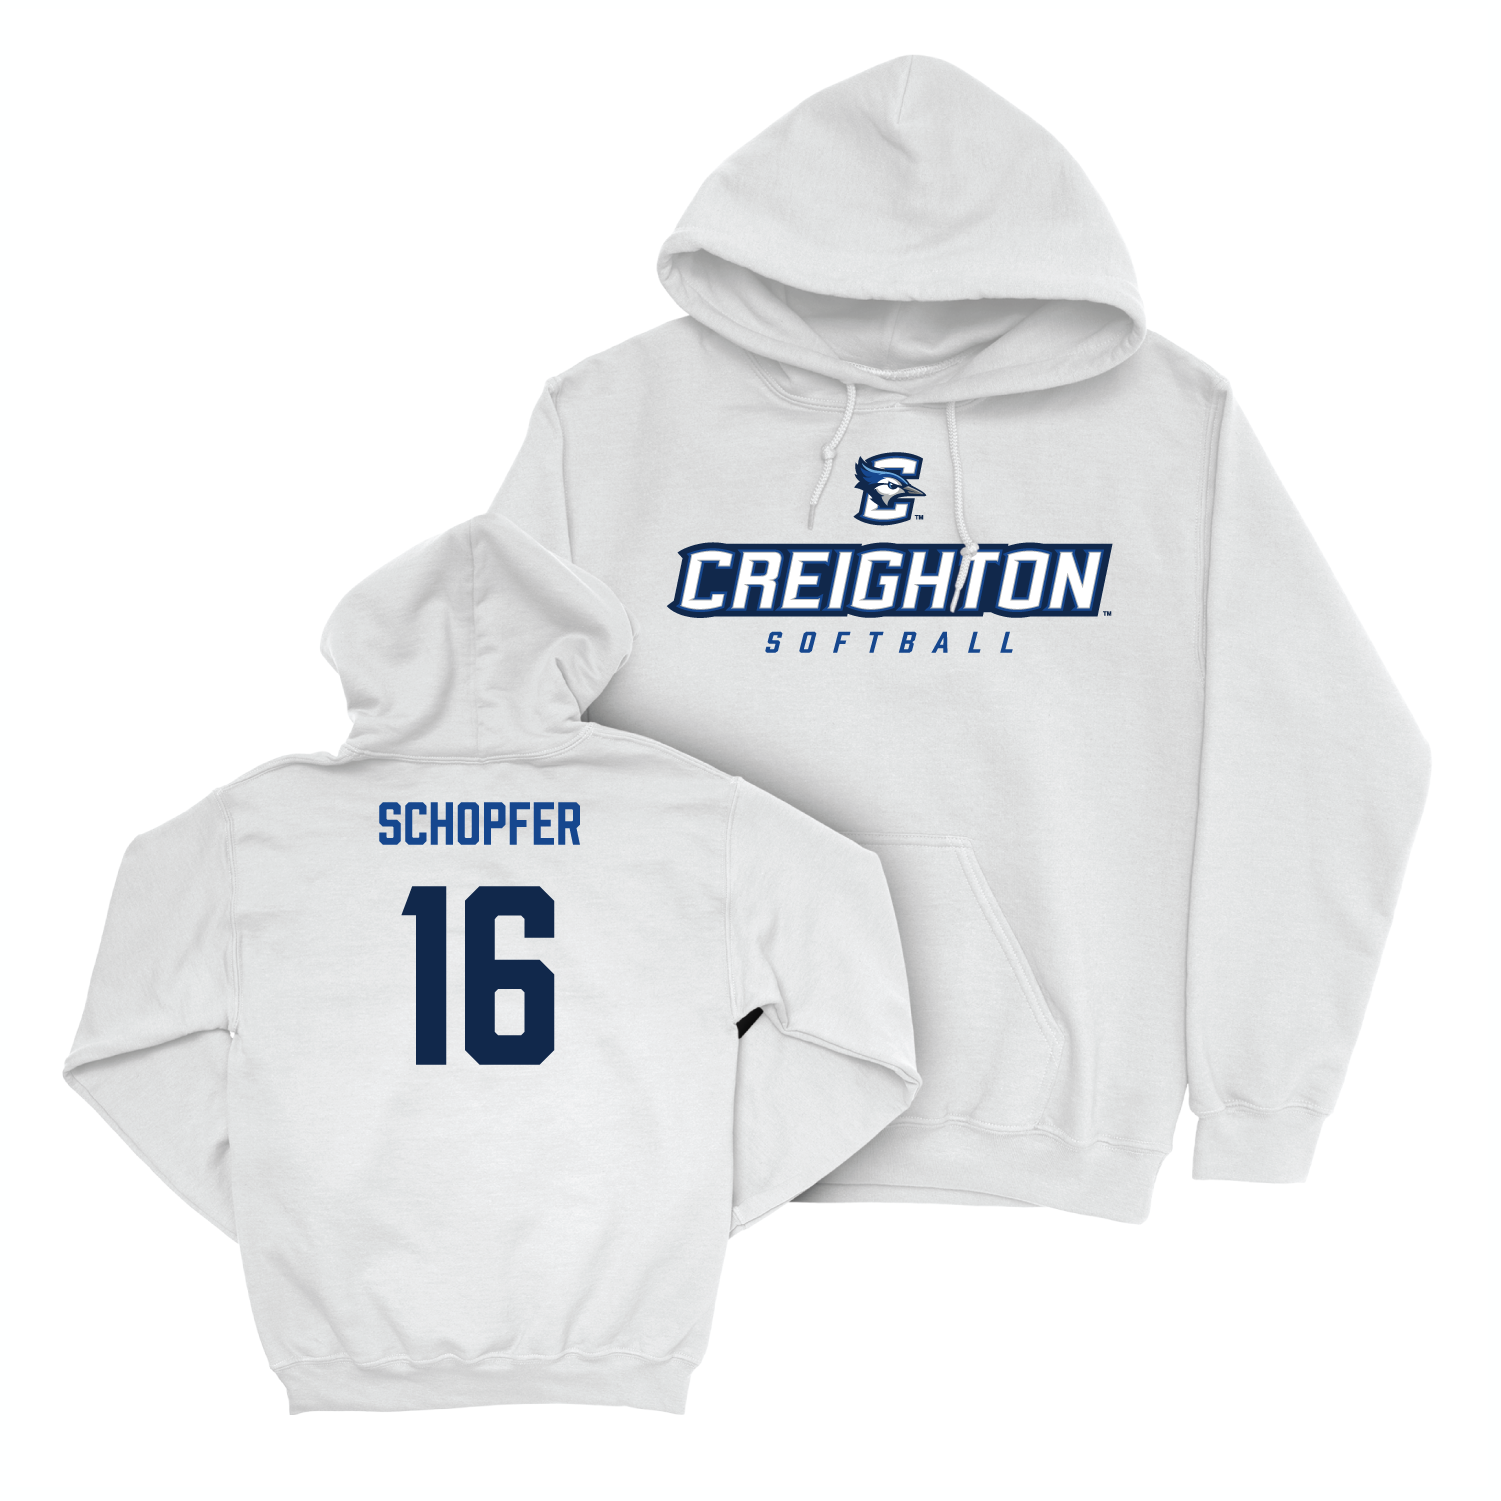 Creighton Softball White Athletic Hoodie - Kenzie Schopfer Youth Small